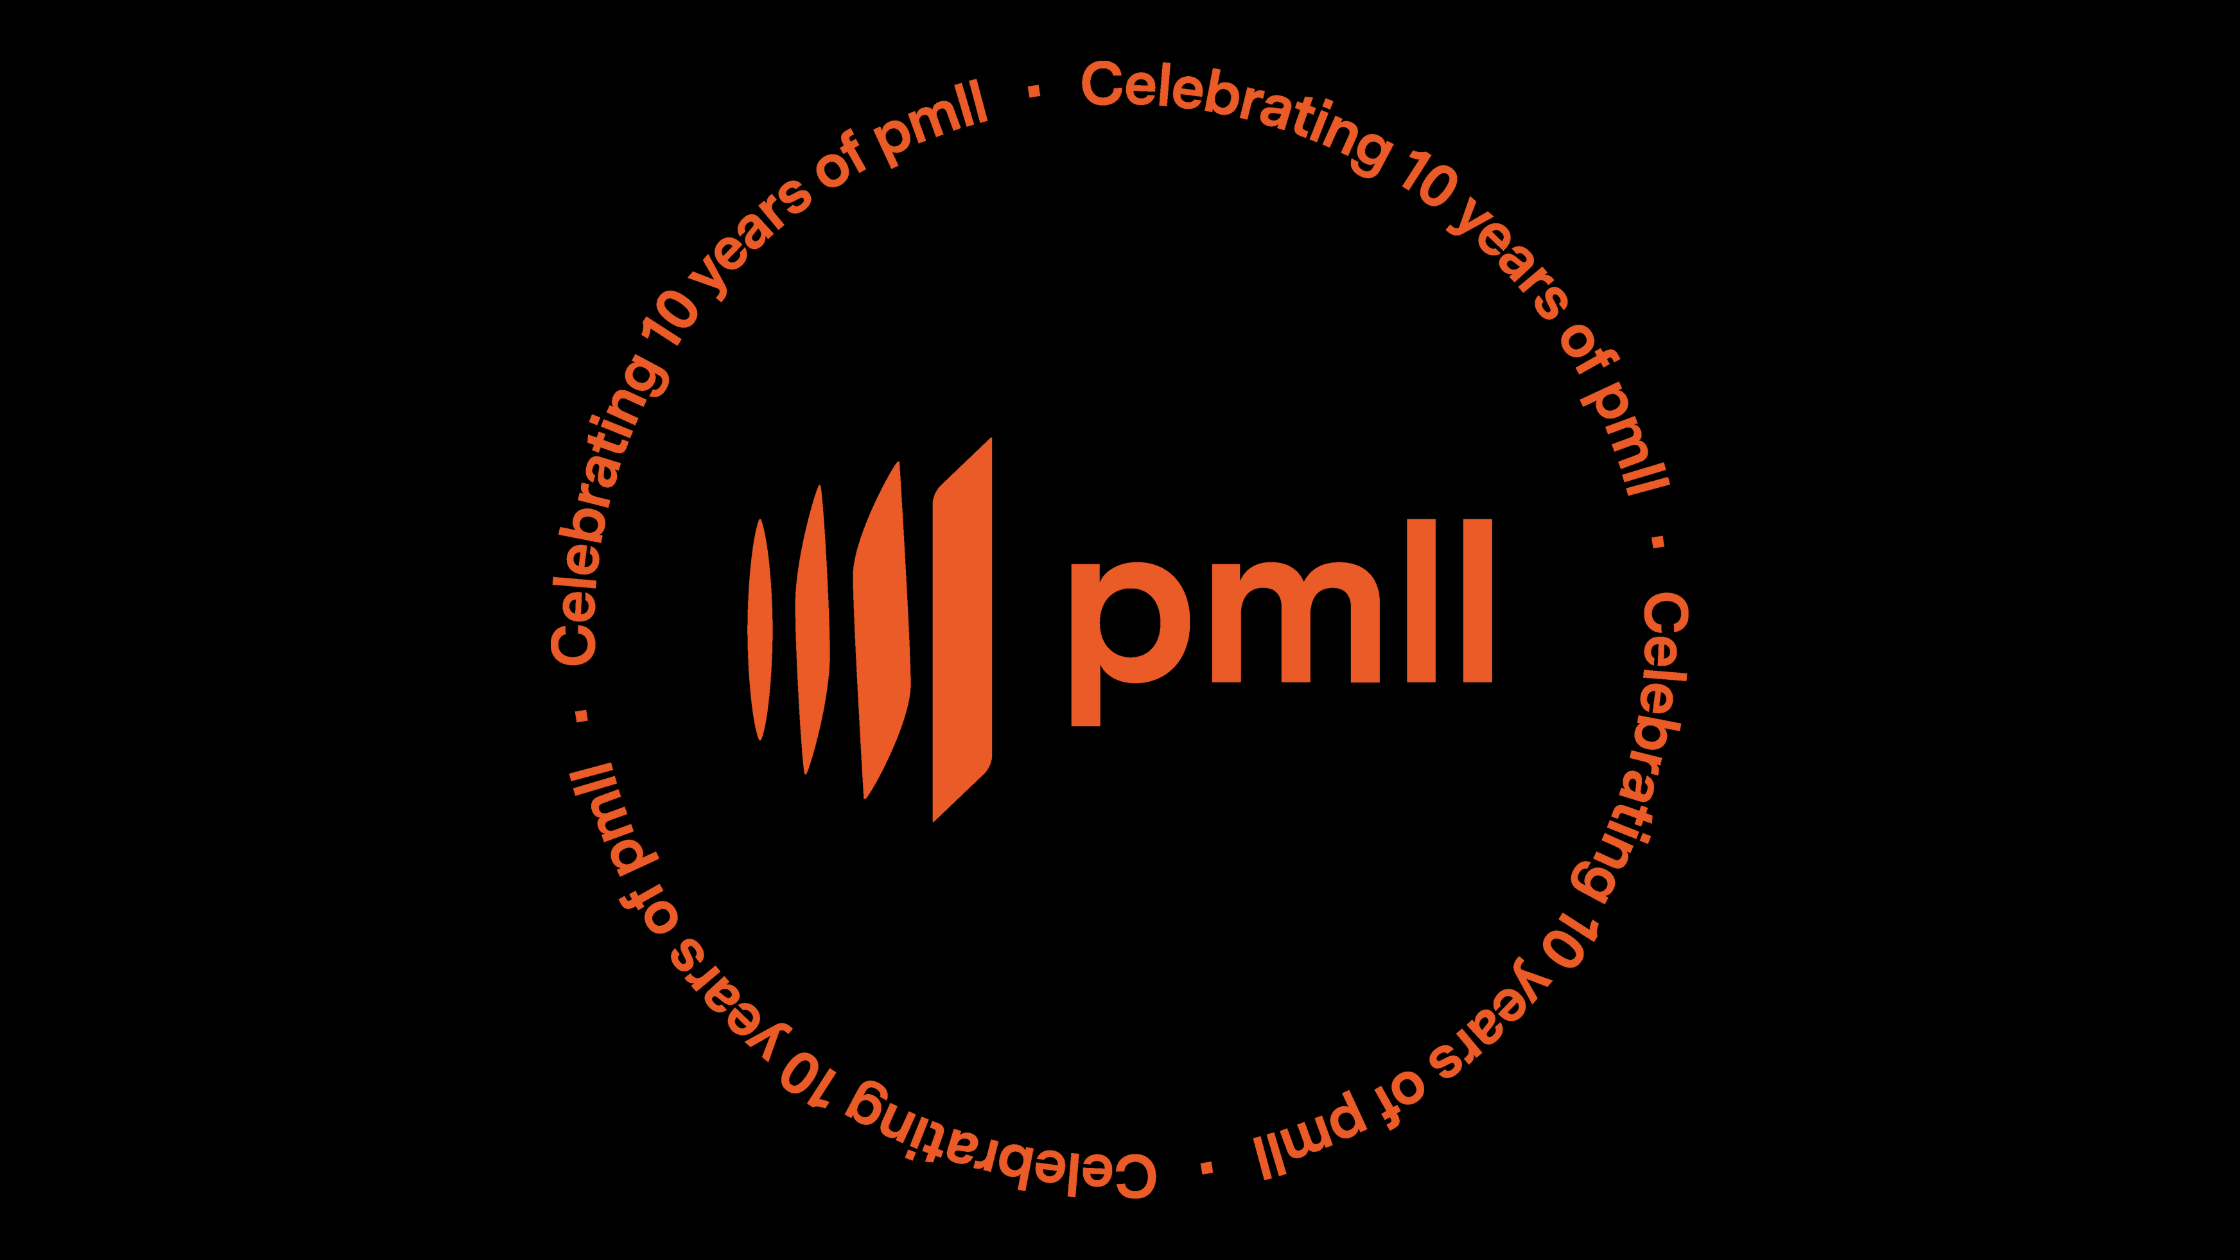 #PMLL10Years